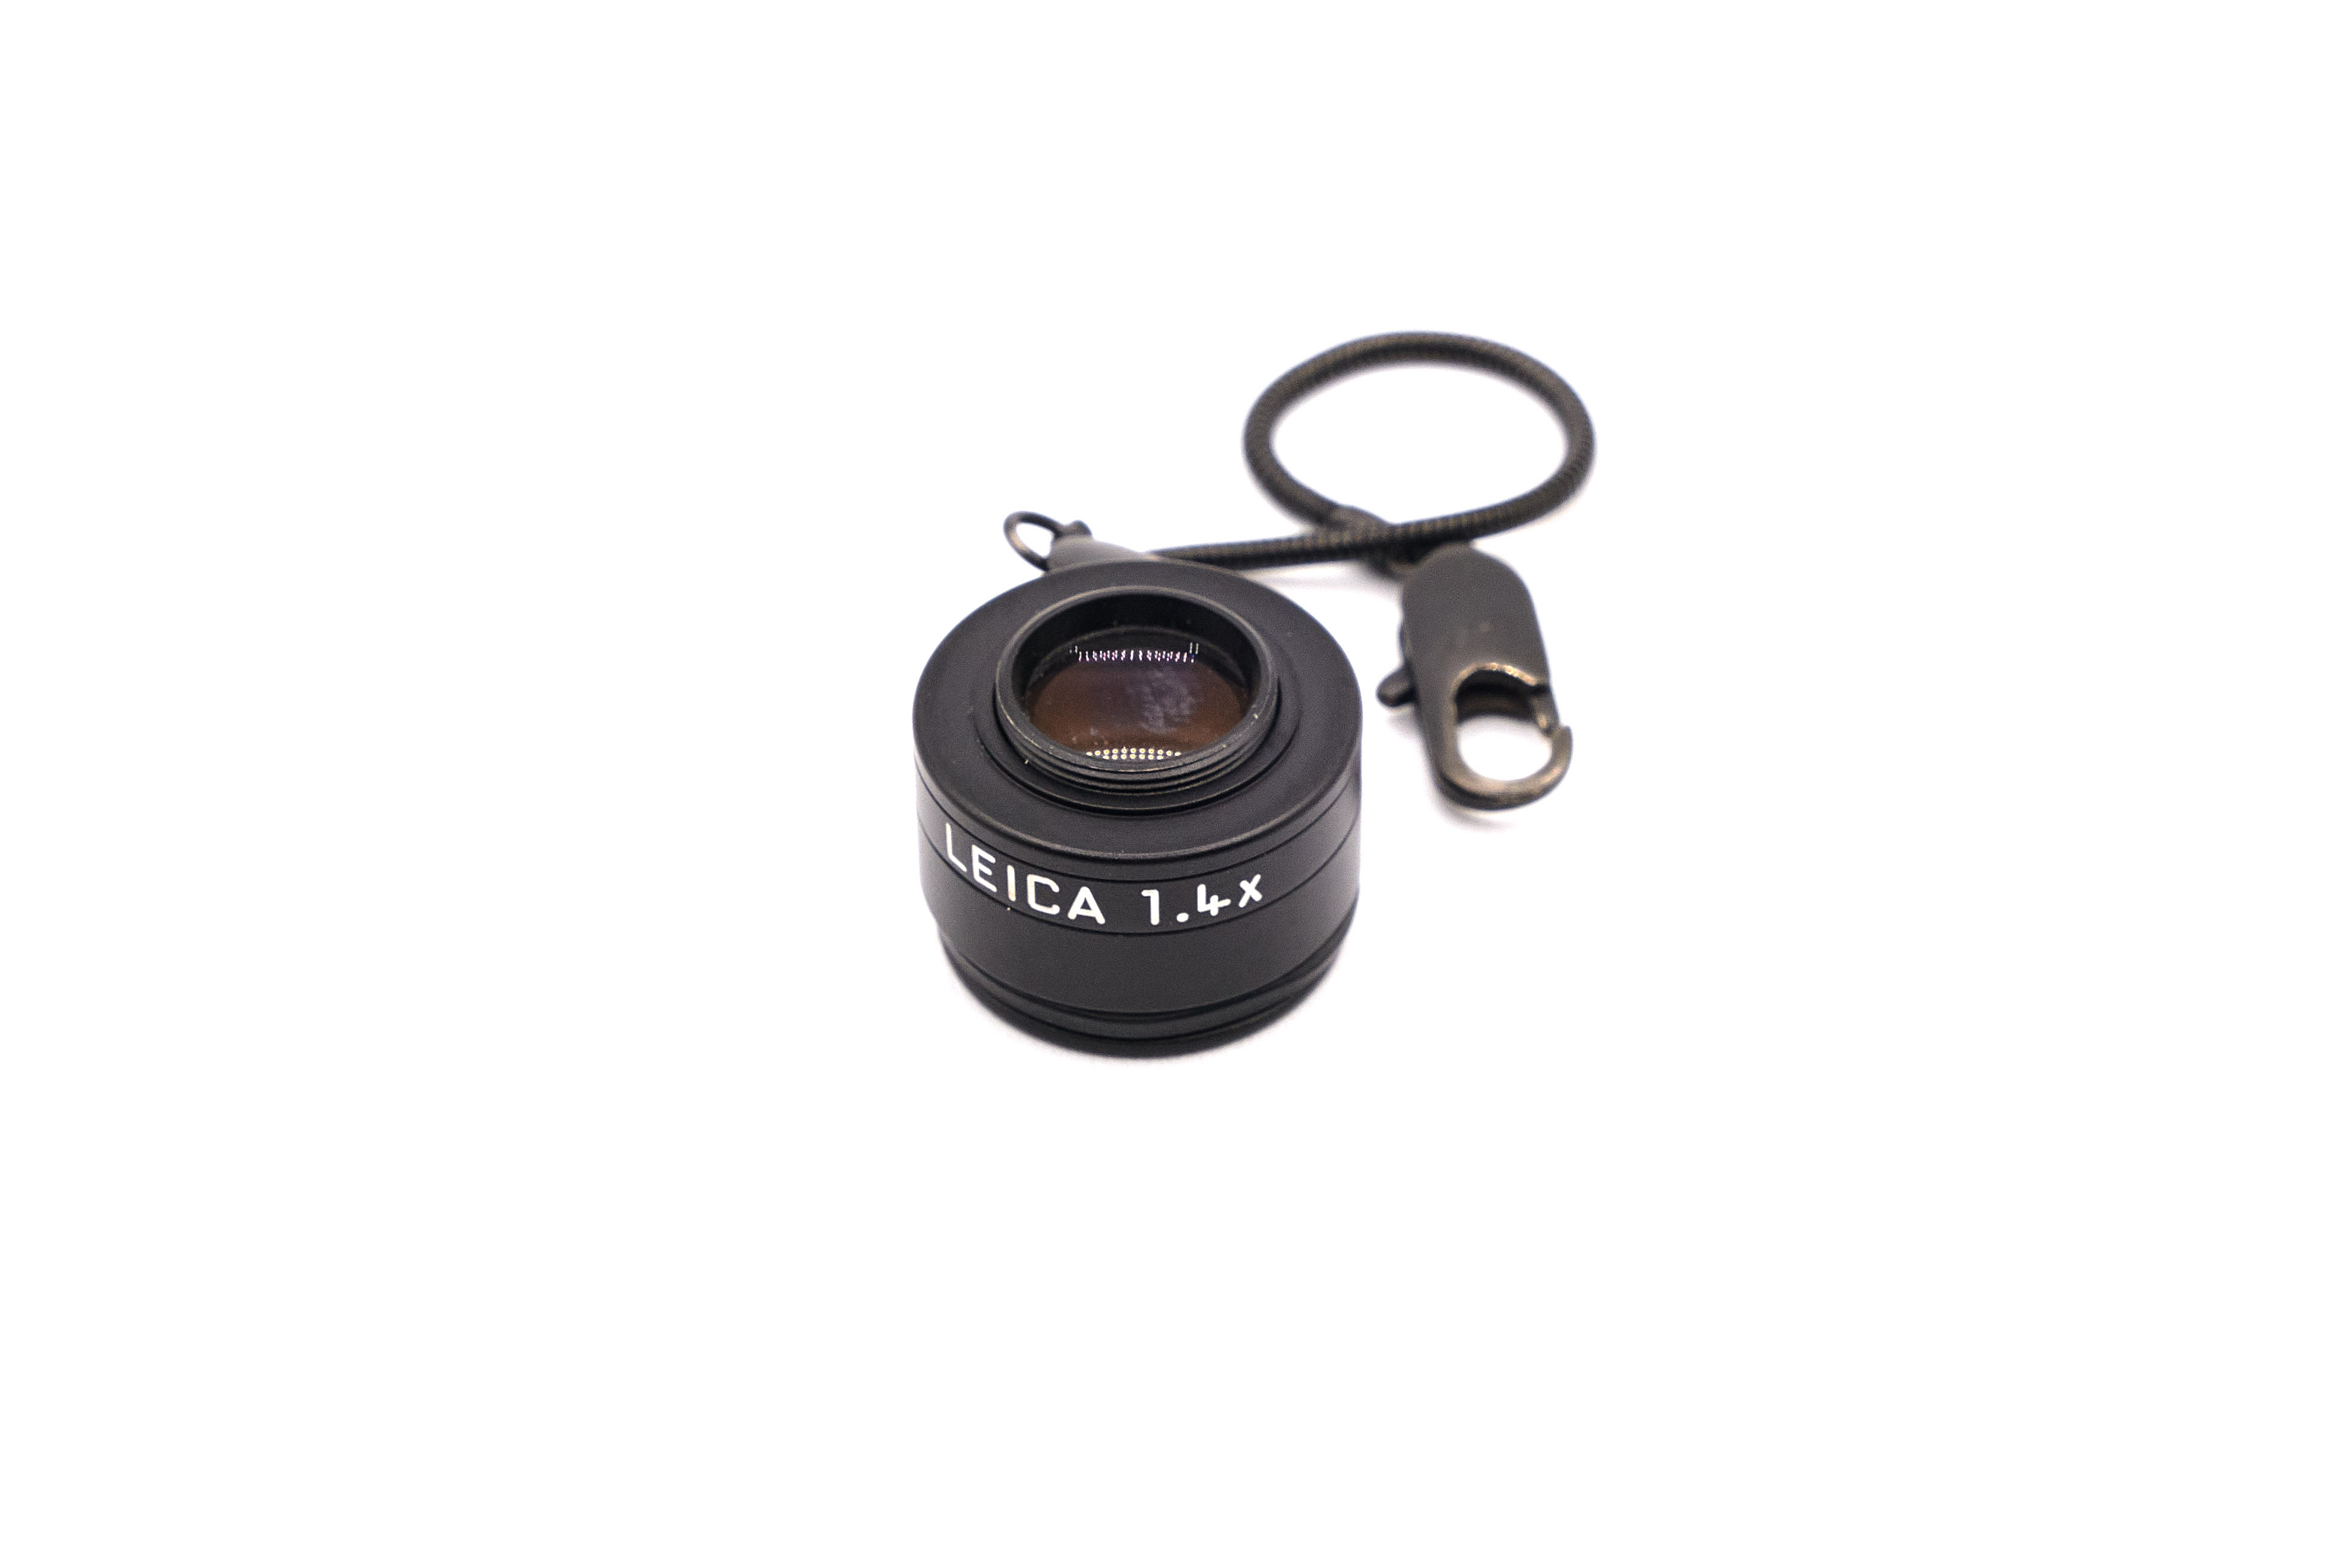 Leica Viewfinder Magnifier M 1.4x 12006